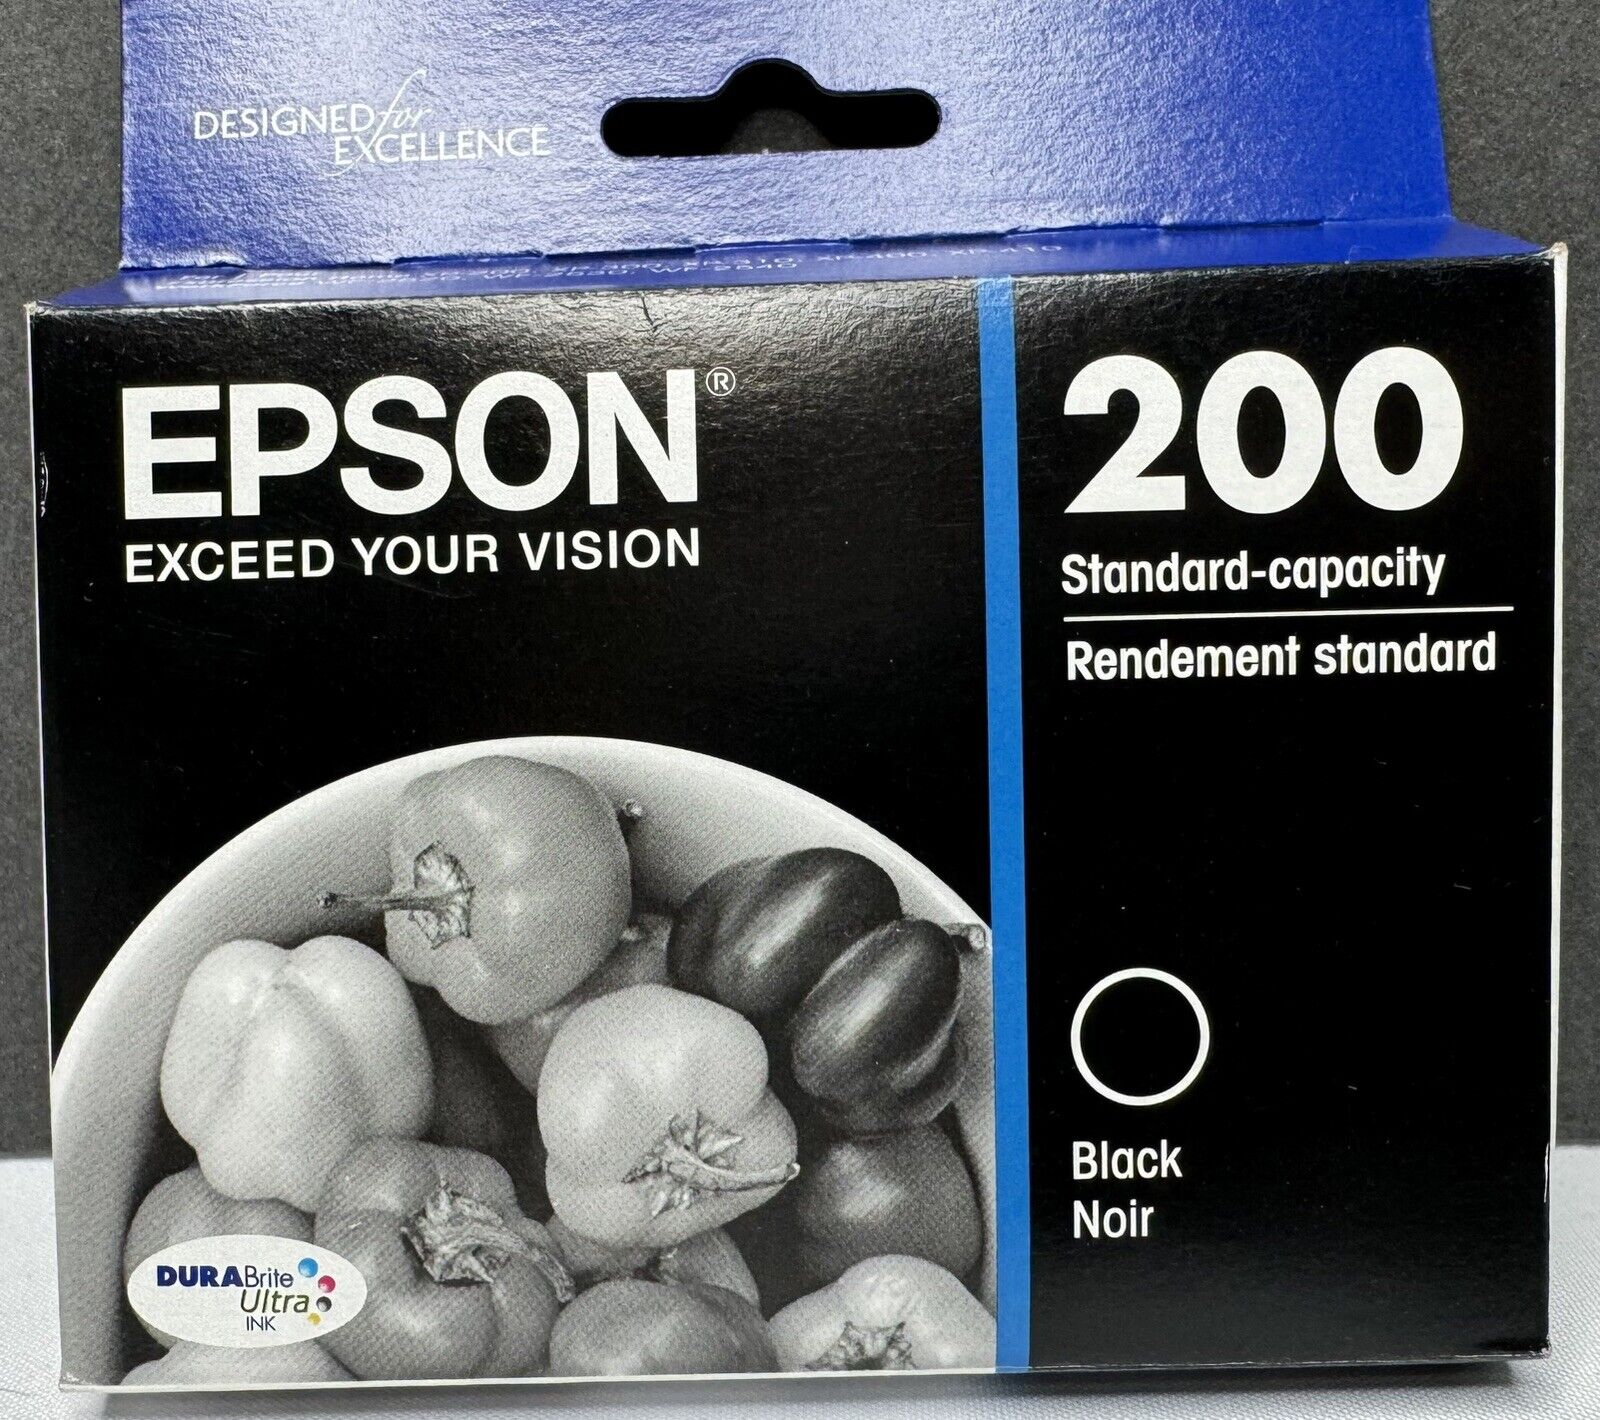 Epson 200 DURABrite Ultra Standard-Capacity Black Ink Cartridge NIB Exp 2/26